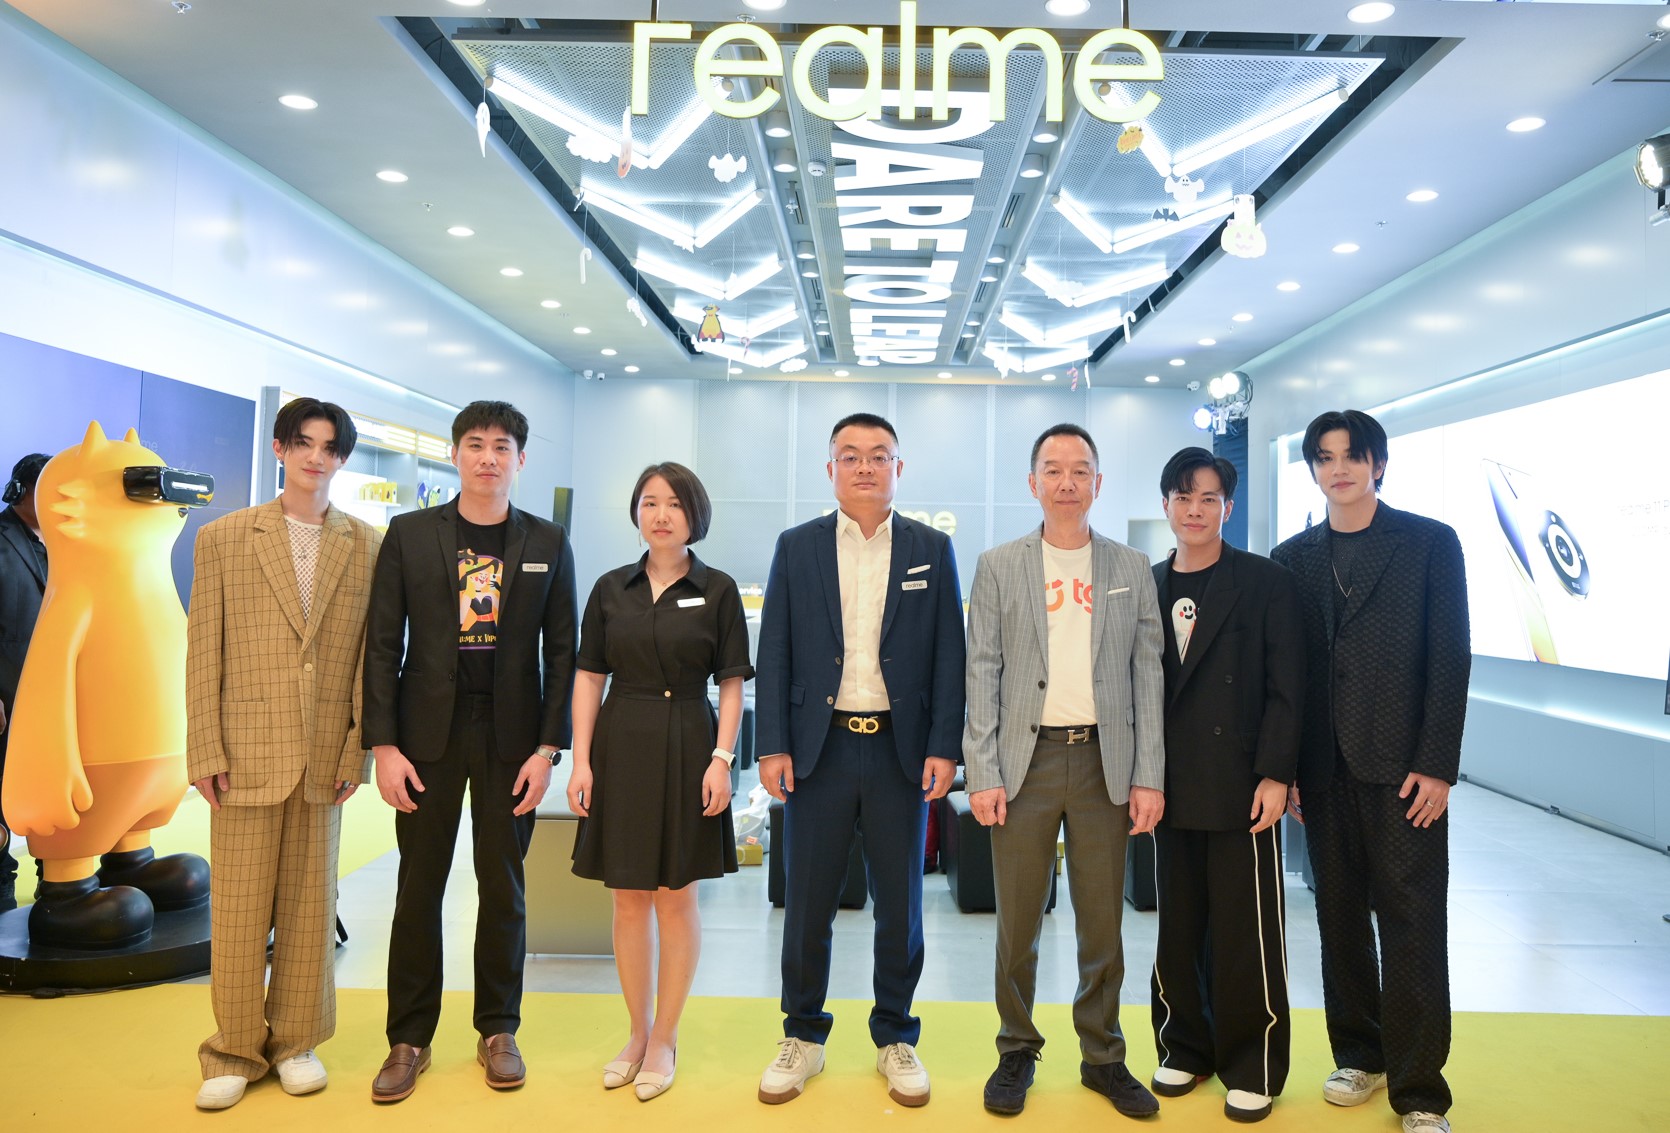 realme เปิดตัว realme Experience Store 3.0 แห่งแรกในประเทศไทย ณ เดอะ มอลล์ ไลฟ์สโตล์ บางแค